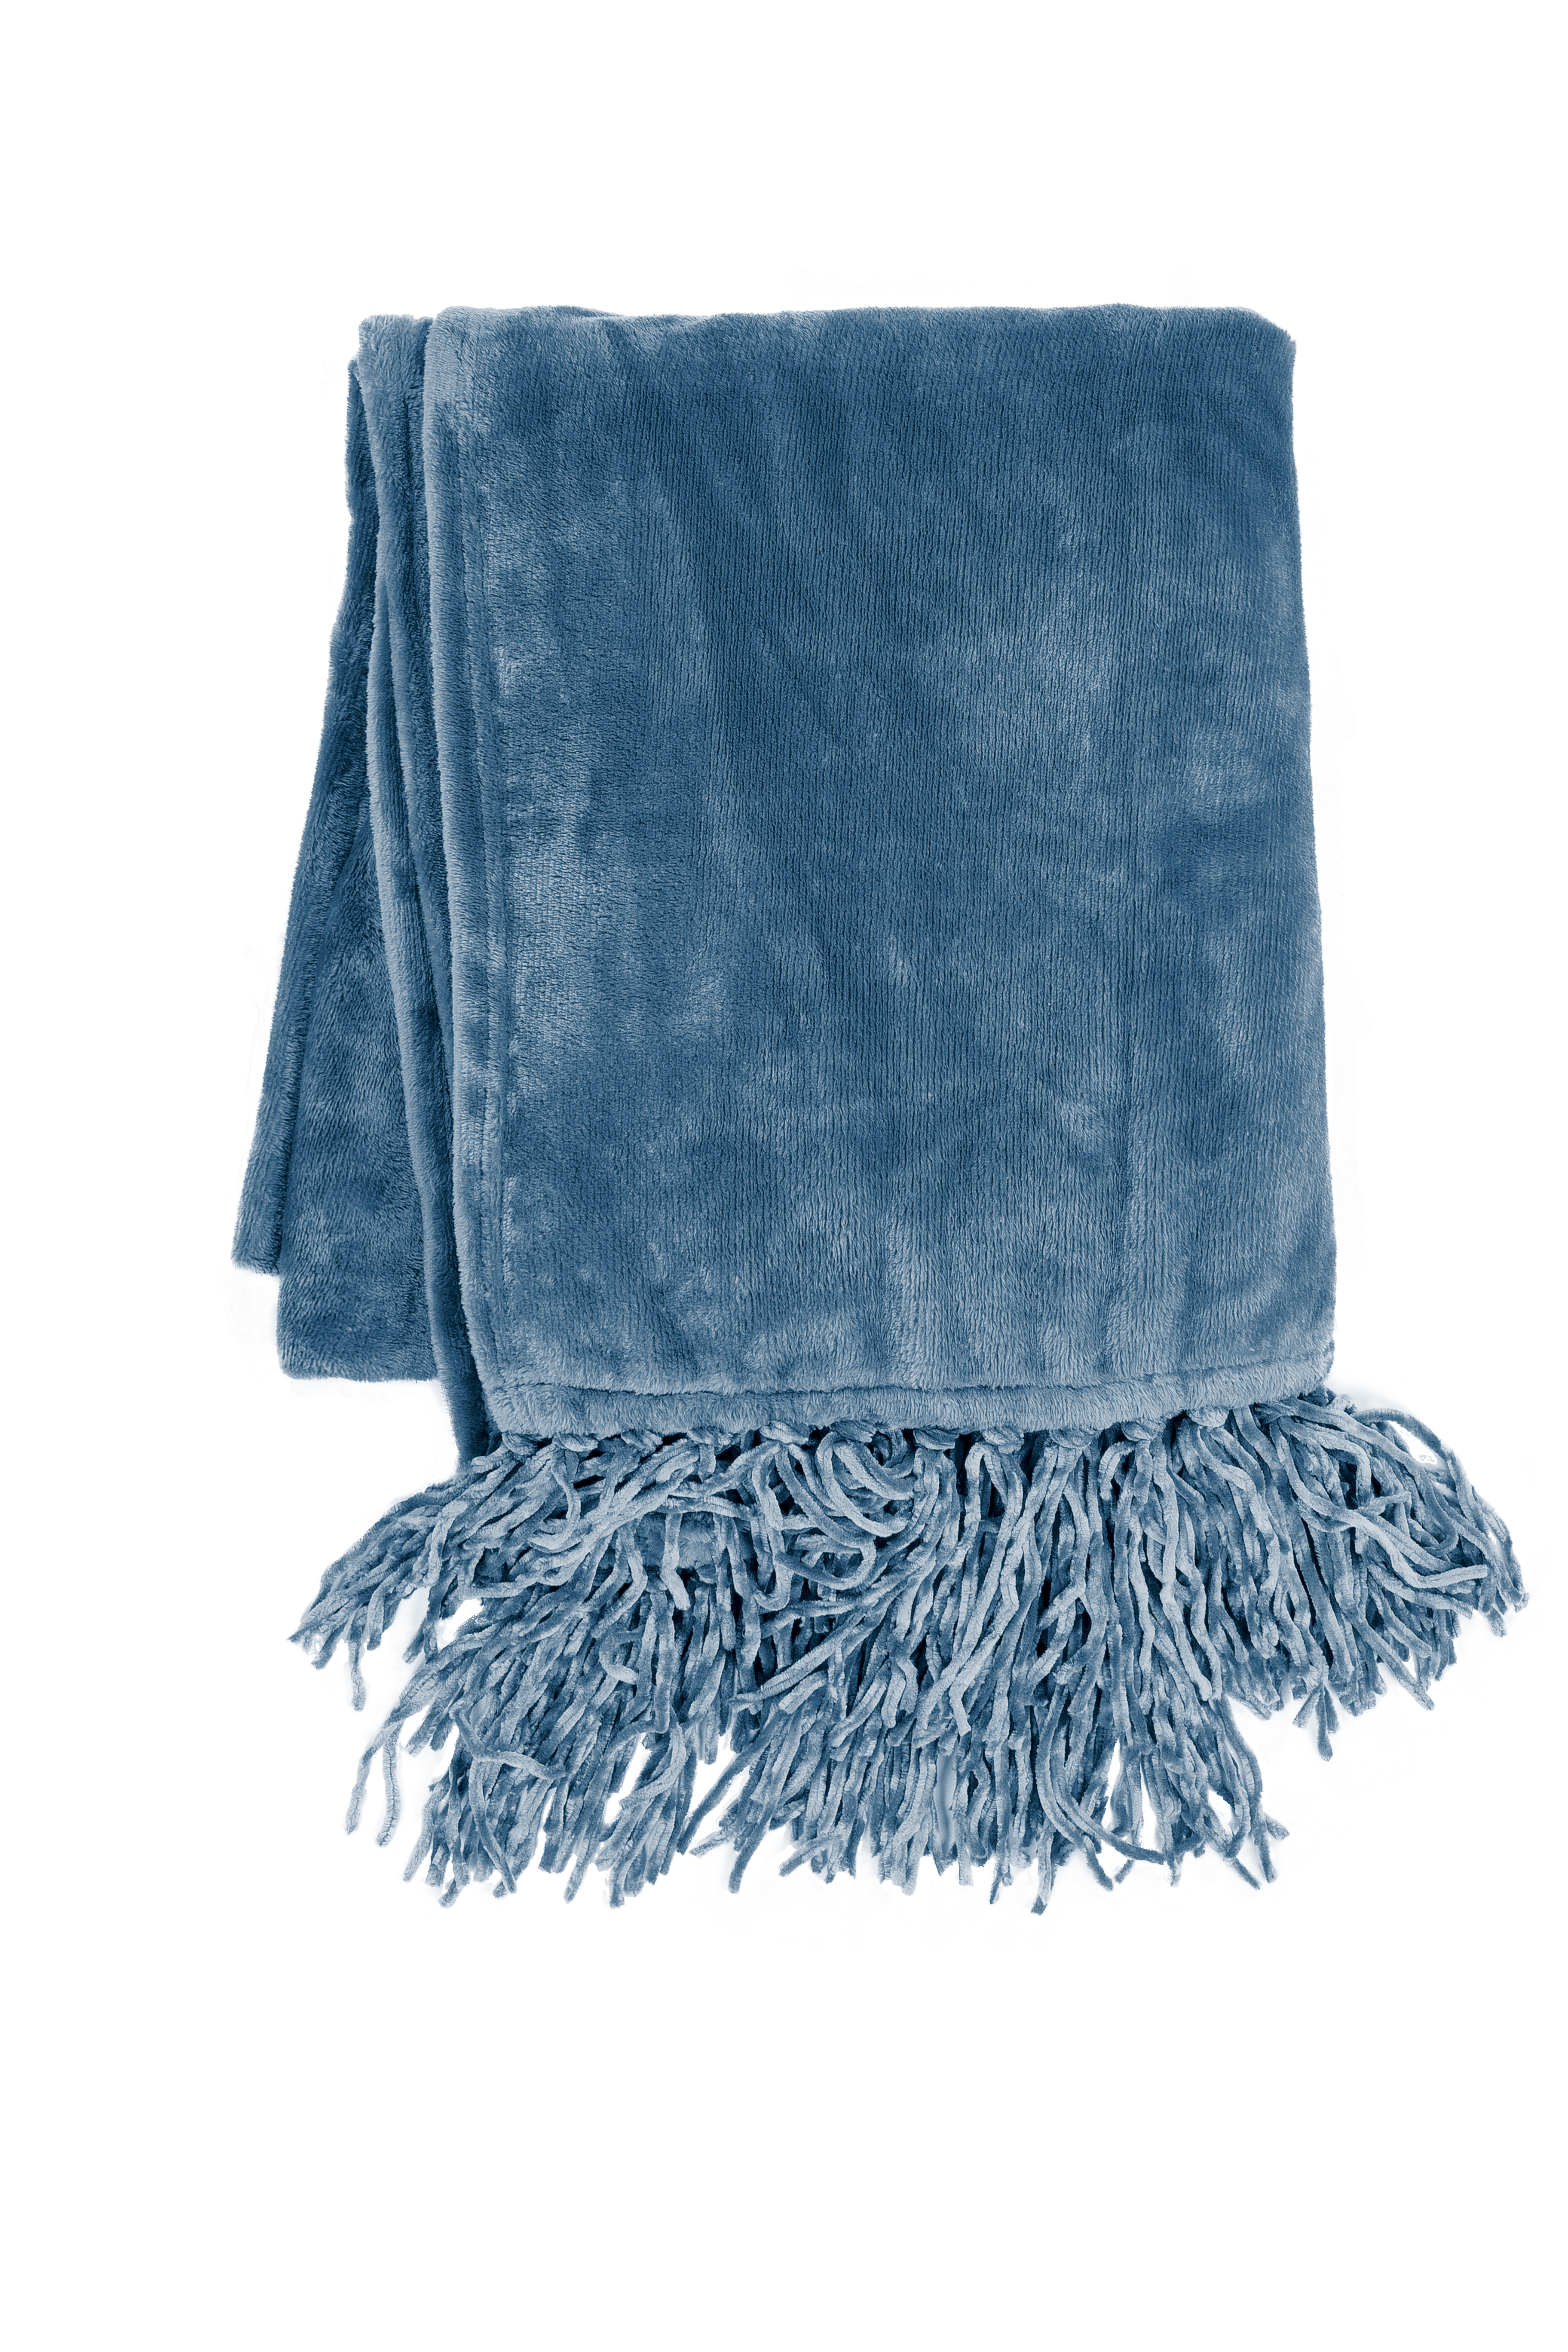 Plaid Micro flannel solid, coral blue, 130x170 CM